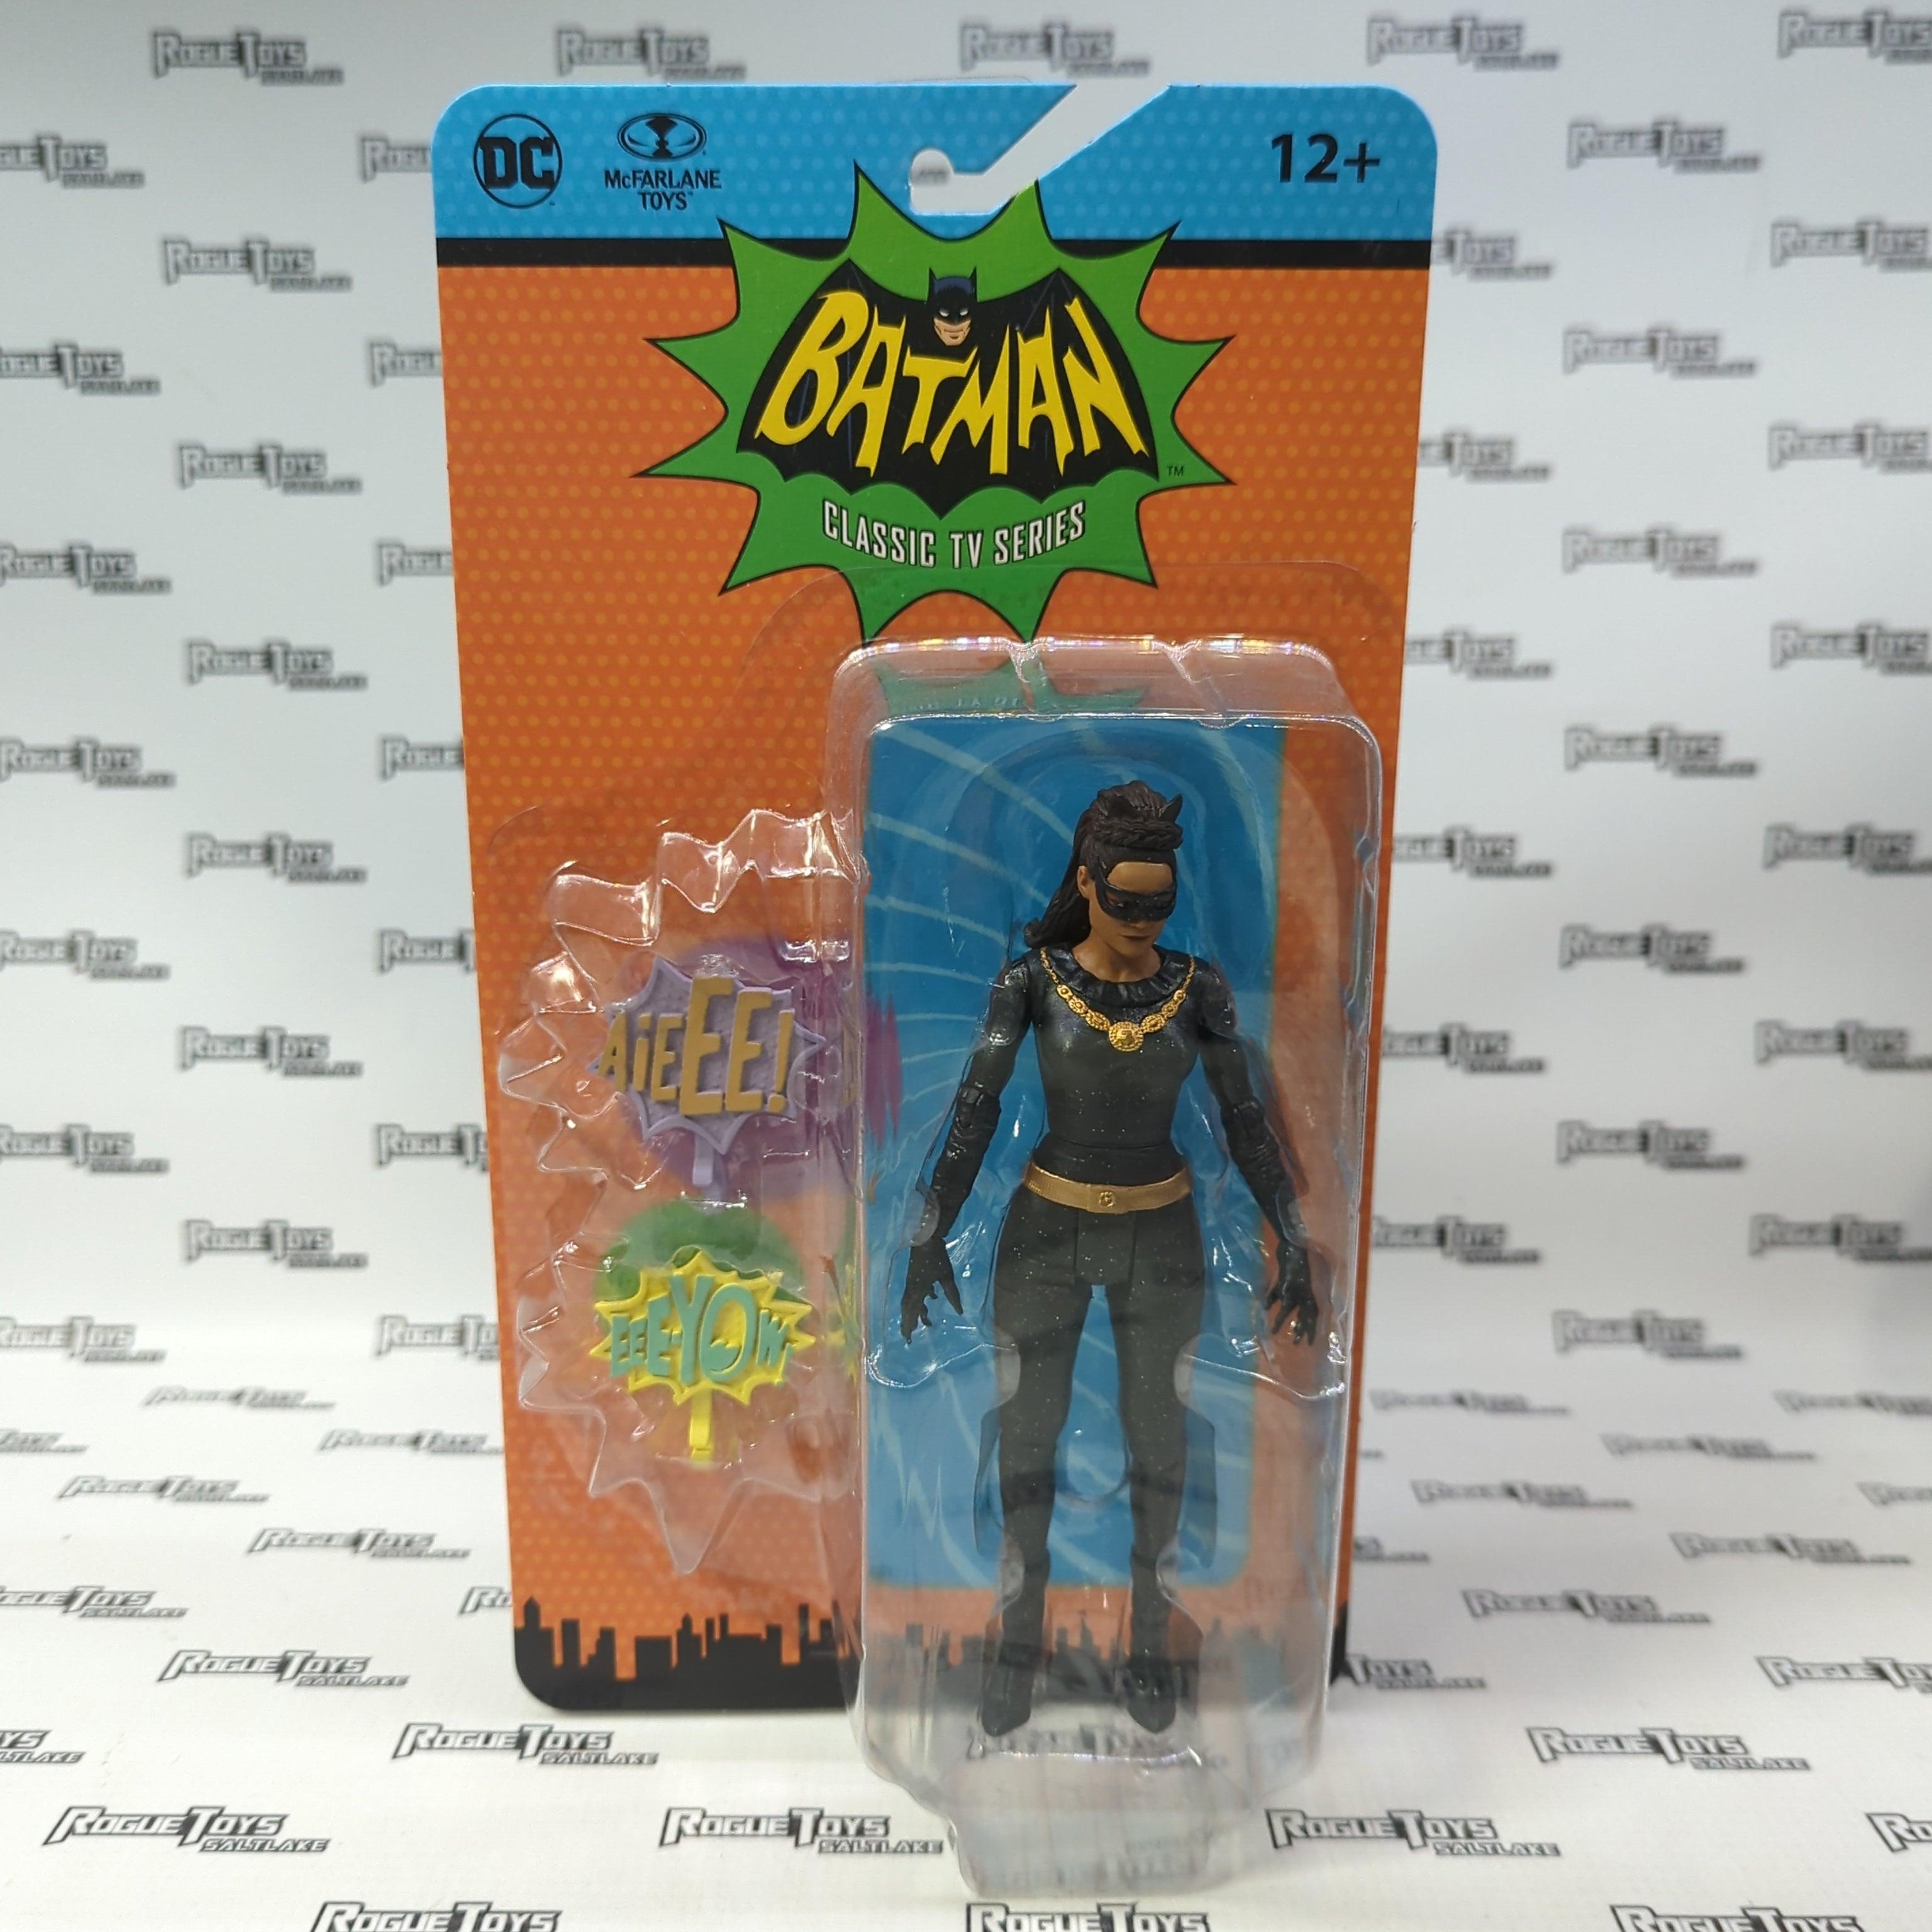 McFarlane Toys Batman Classic TV Series Catwoman - Rogue Toys